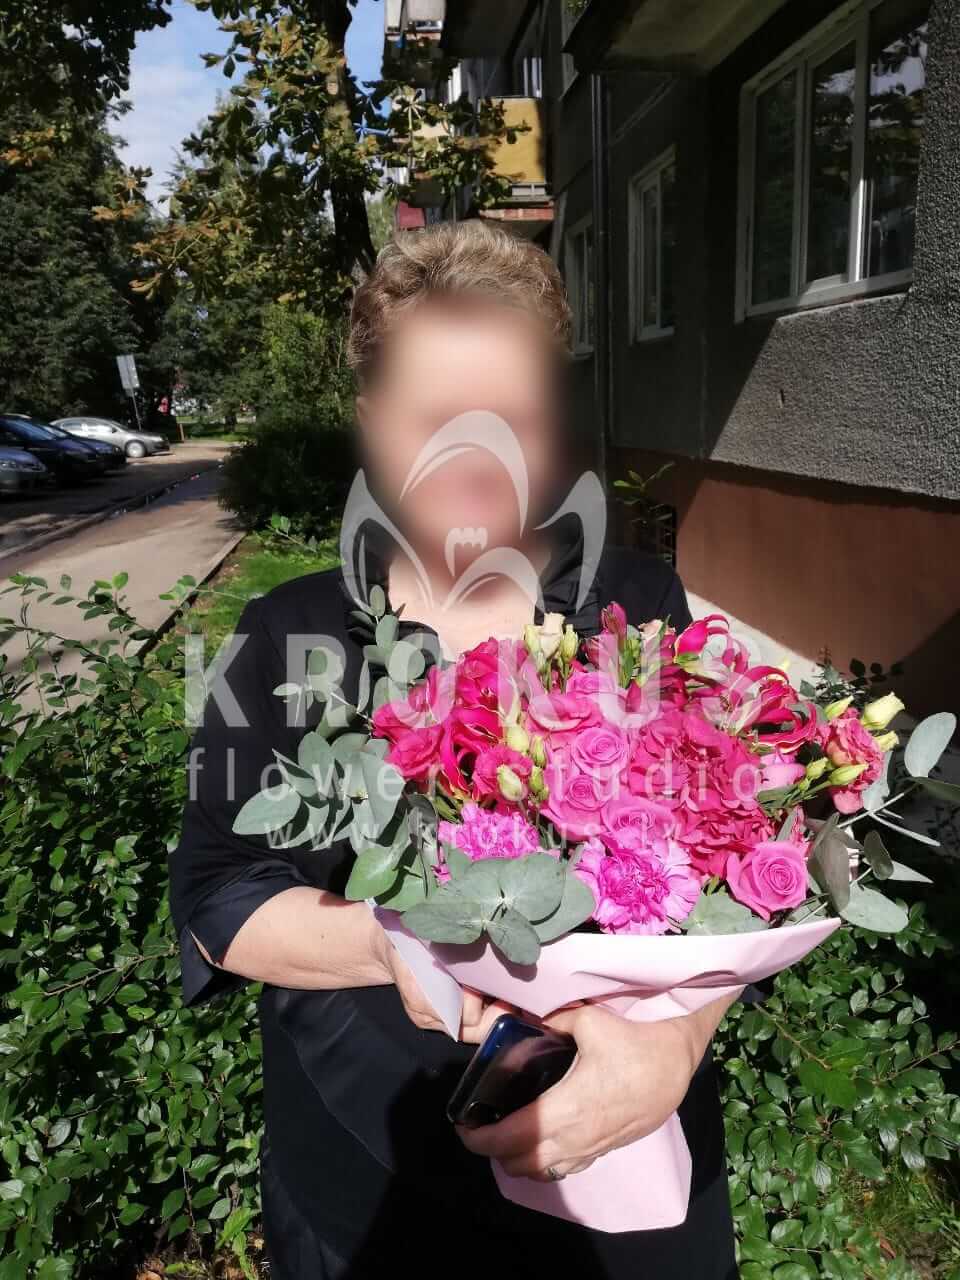 Ziedu piegāde Latvia Rīga (celozijarozā rozesbuvardijaeikaliptshortenzijas)